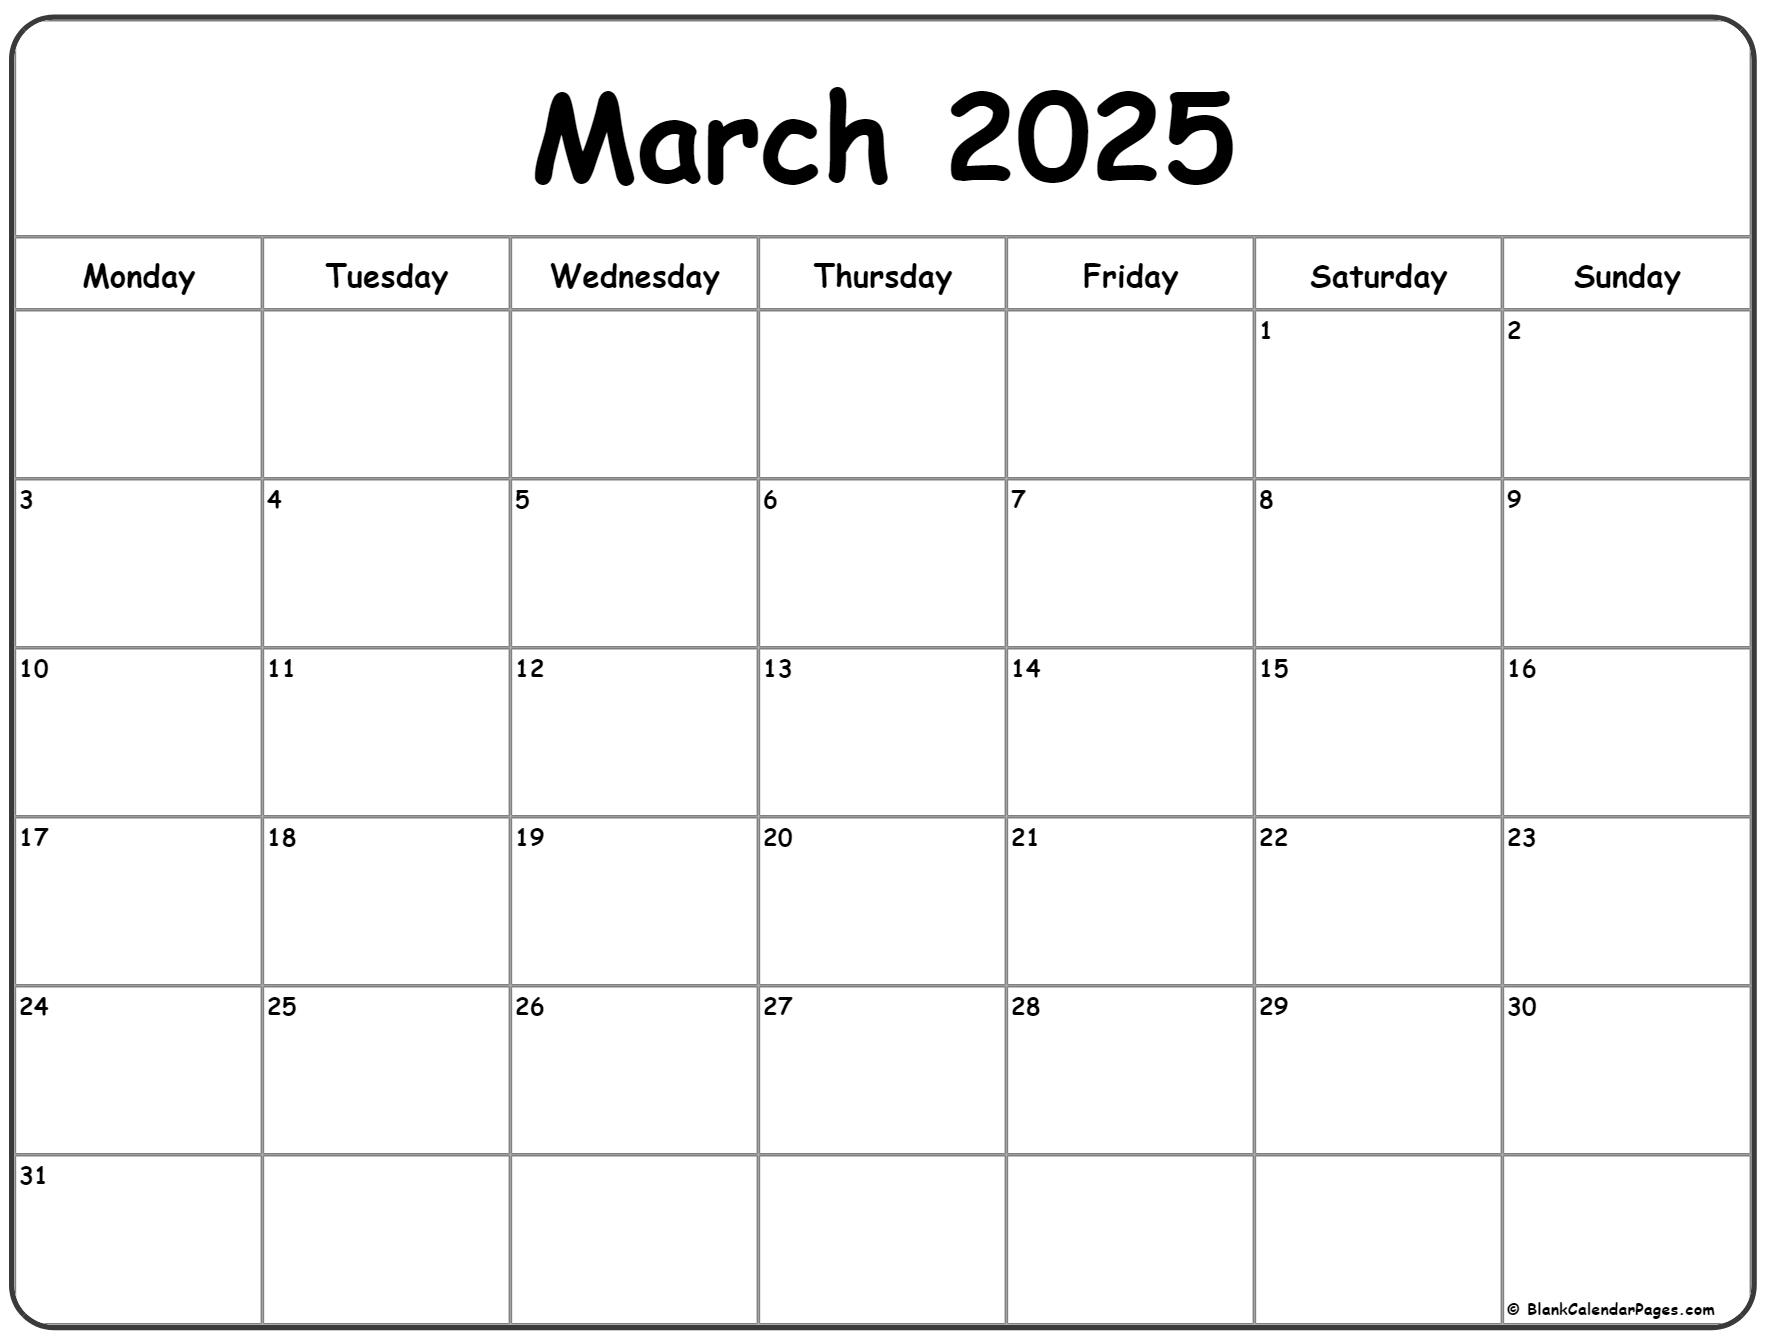 March 2025 Monday calendar. Monday to Sunday